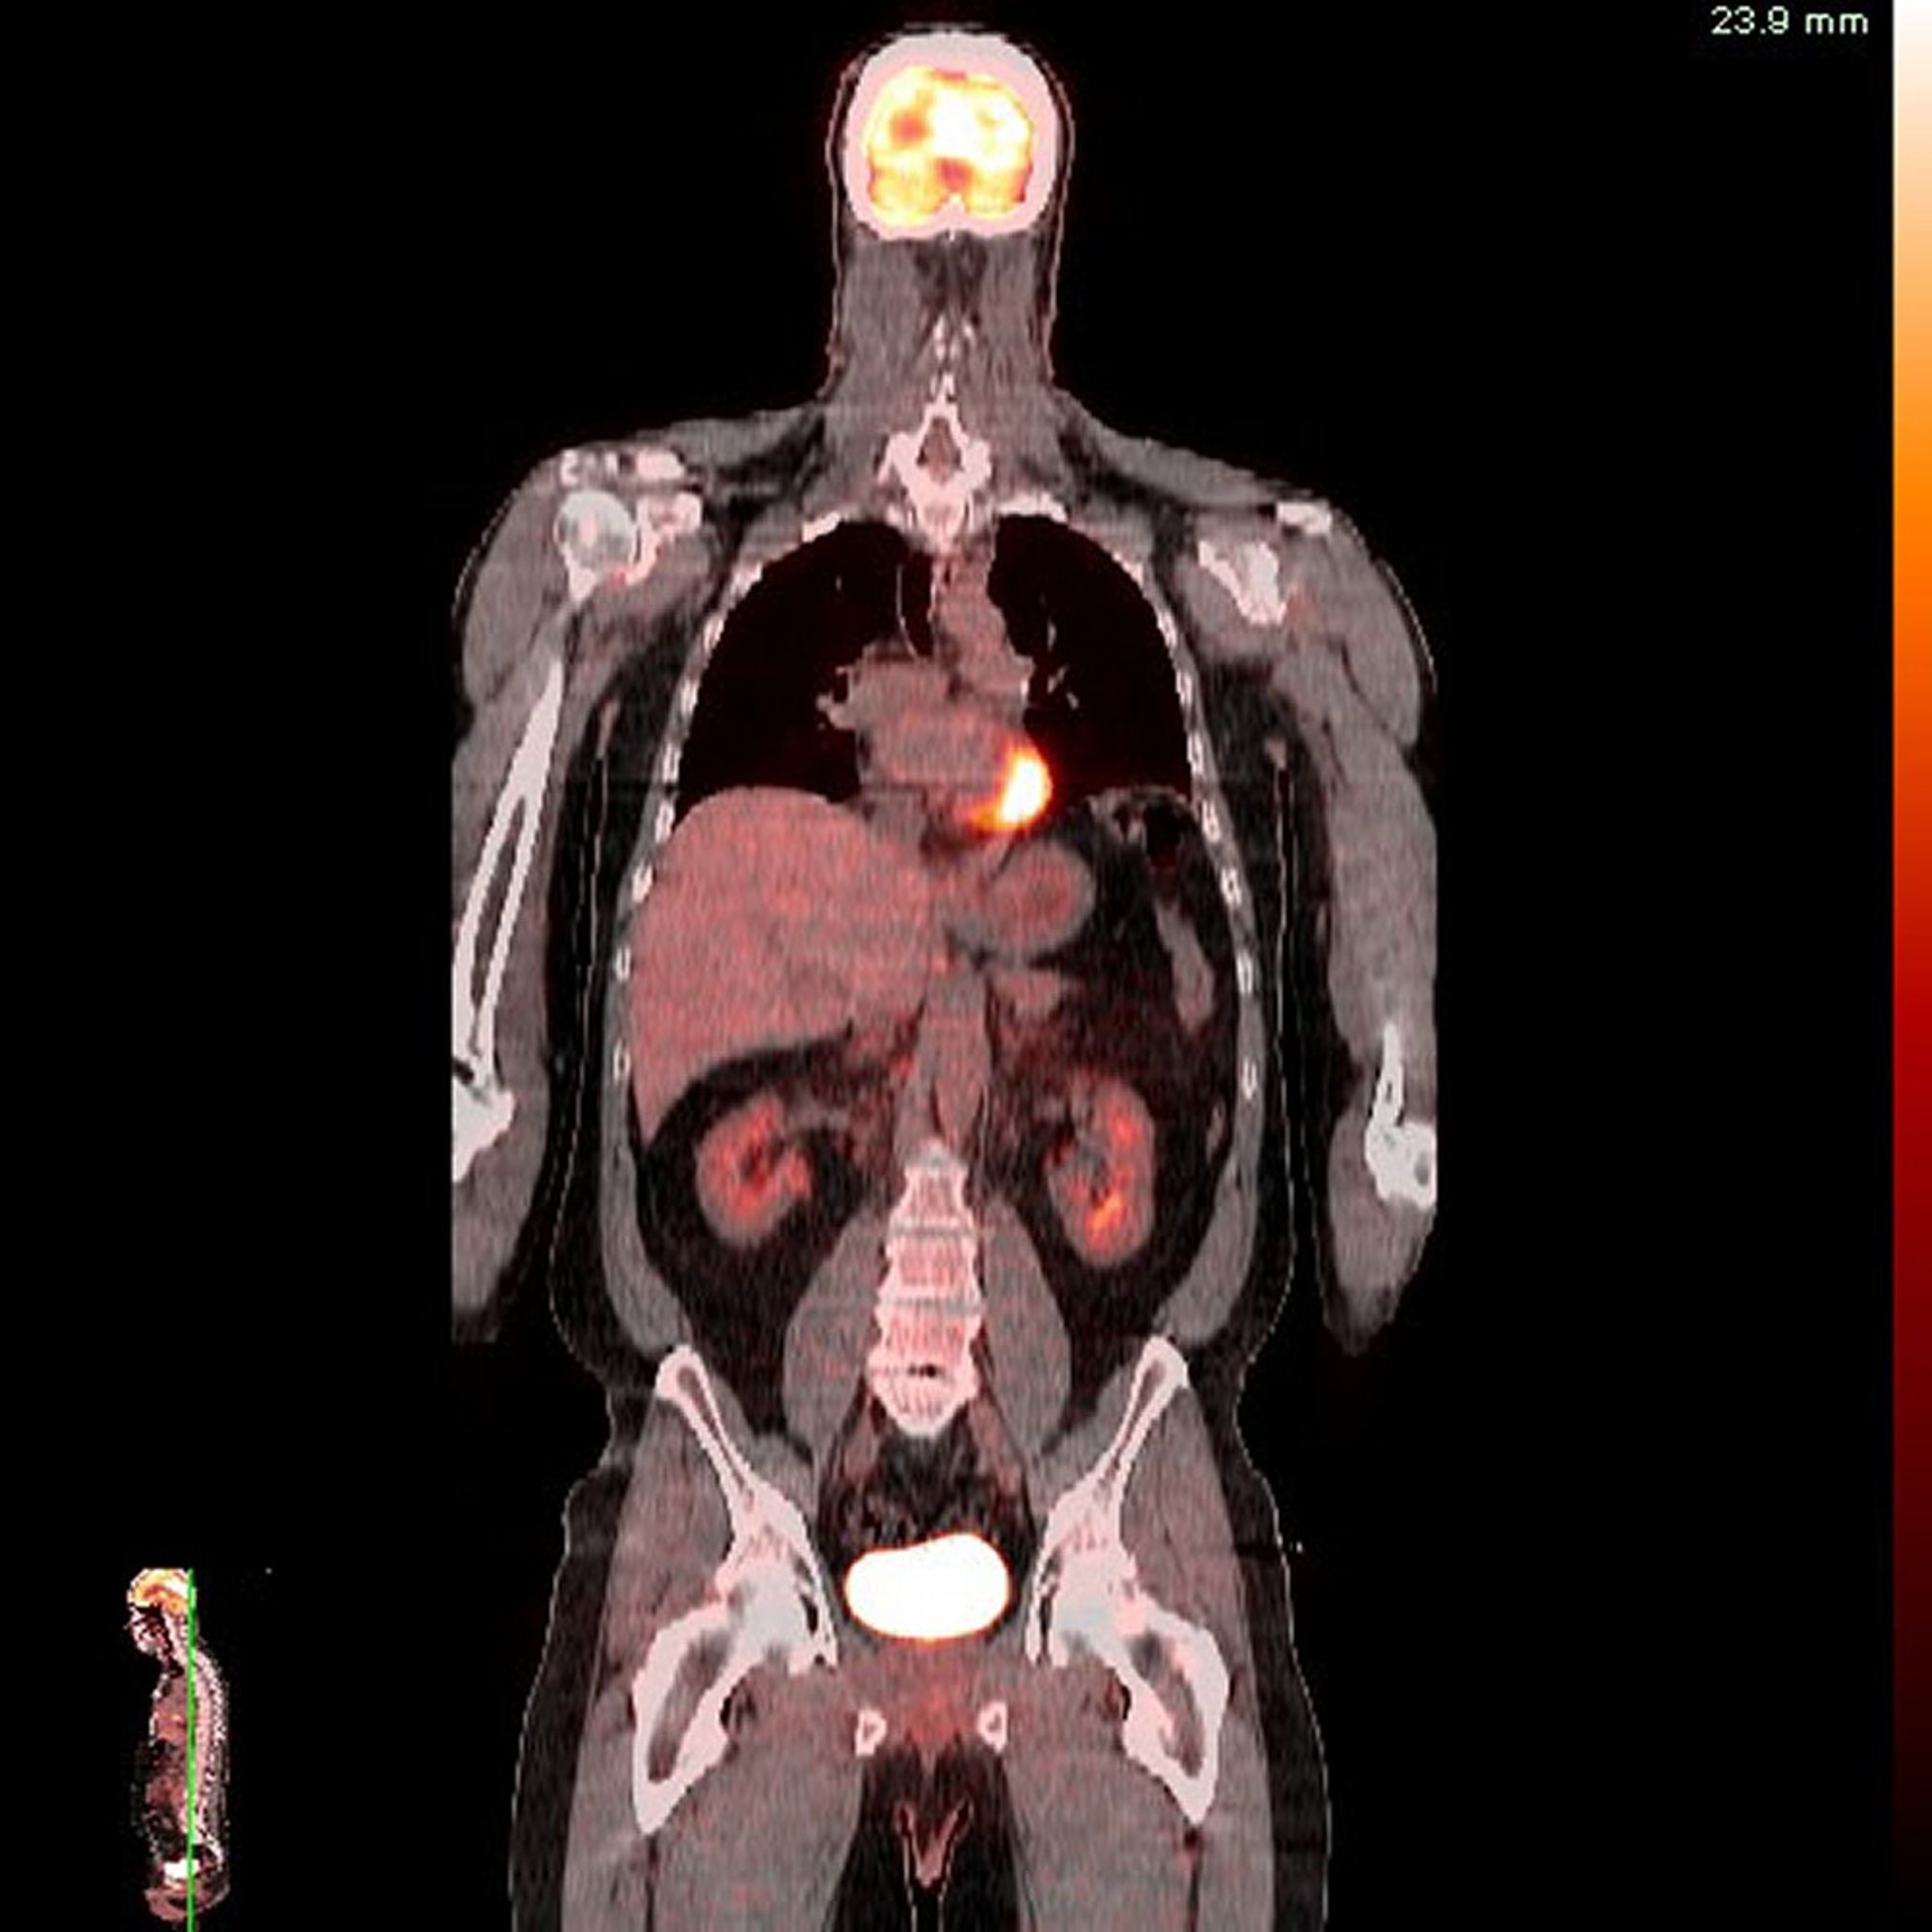 Positron Emission Tomography-Computed Tomography (PET-CT)